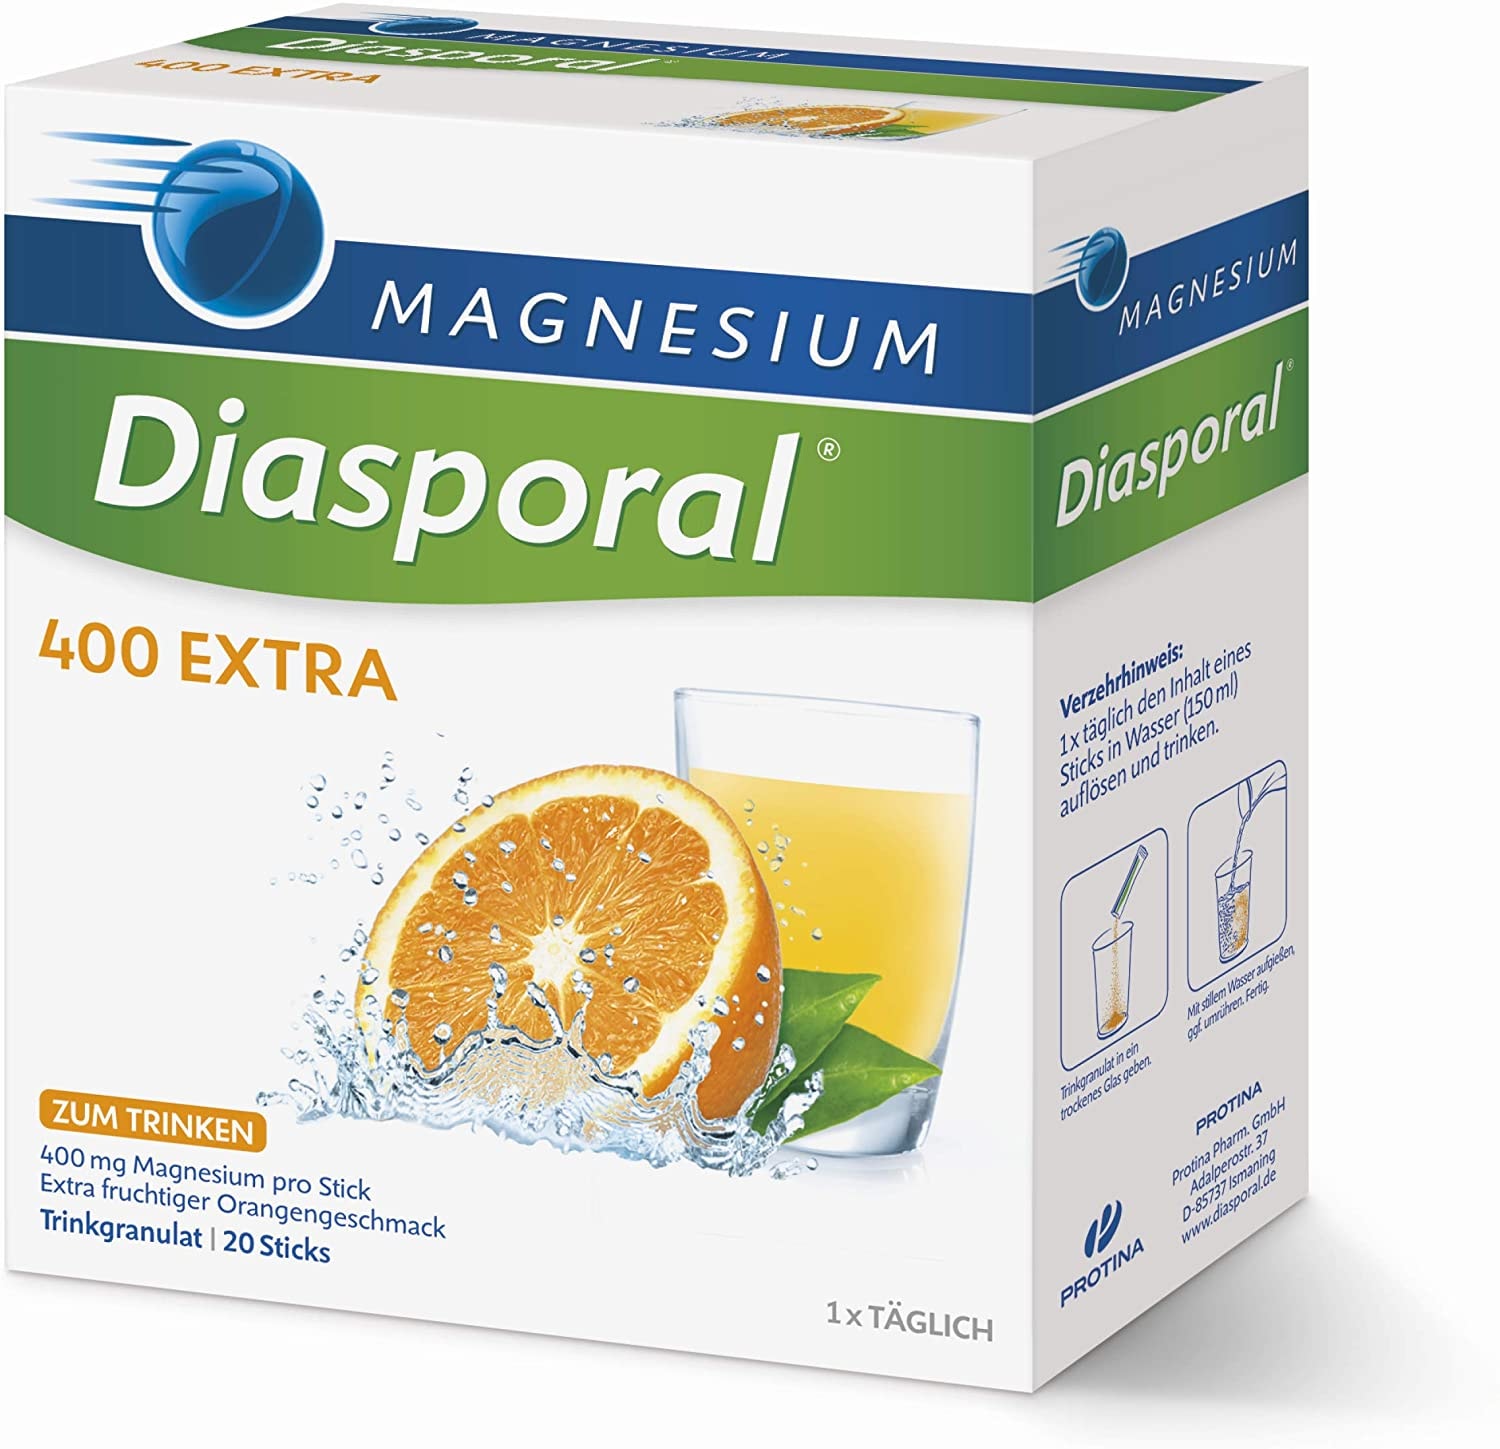 Magnesium-Diasporal 400 EXTRA, Trinkgranulat: EXTRA-KLASSE mit reinem Magnesiumcitrat, 400mg Magnesium pro Stick, 20 Sticks